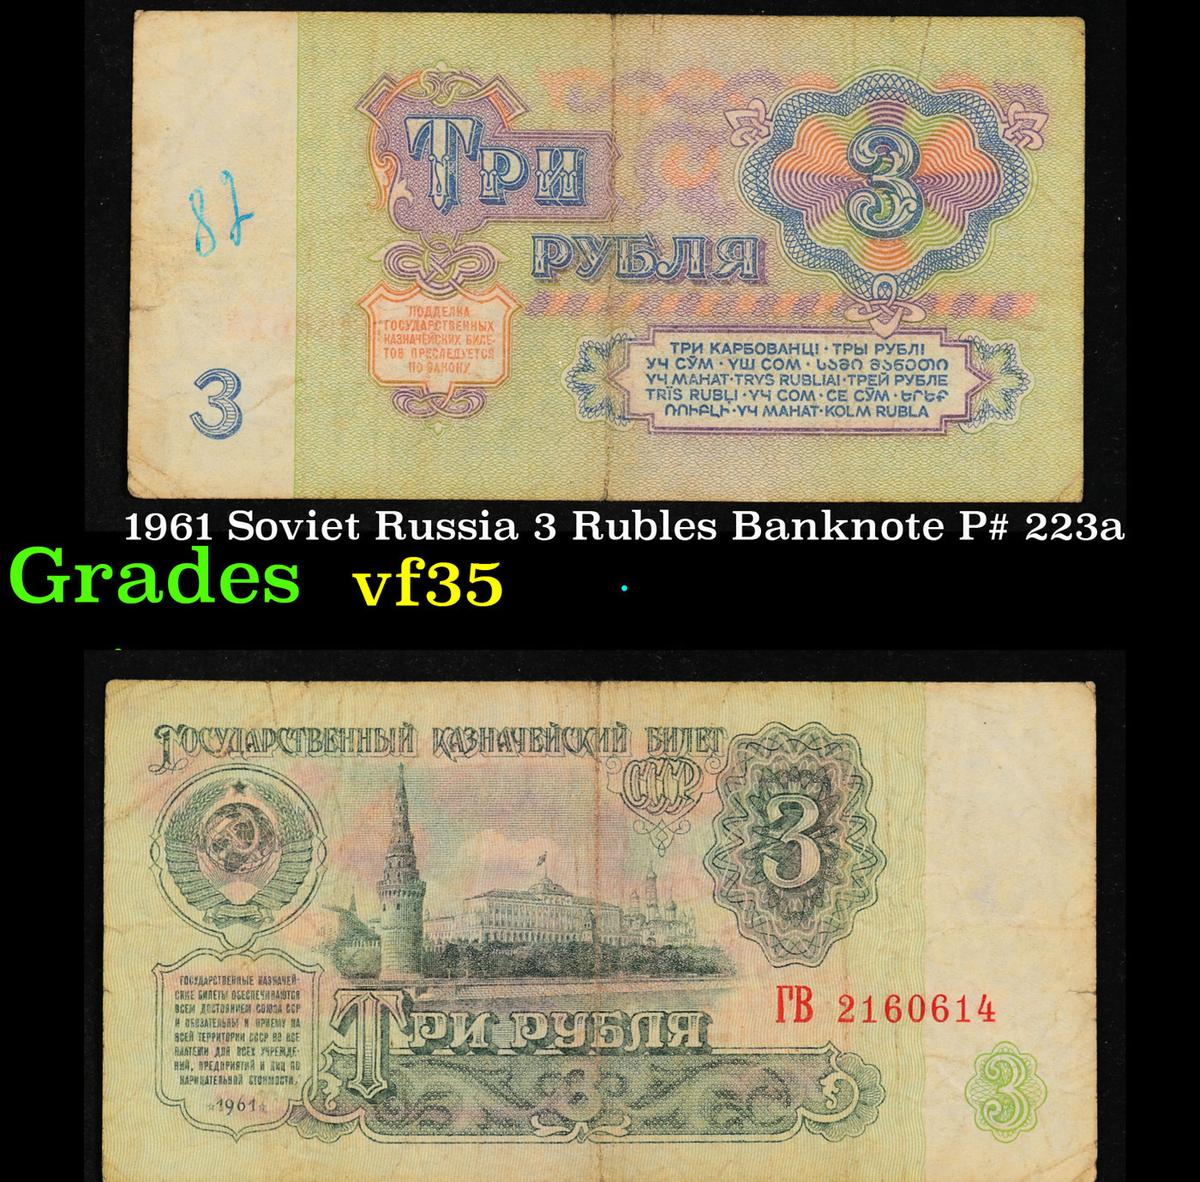 1961 Soviet Russia 3 Rubles Banknote P# 223a Grades vf++